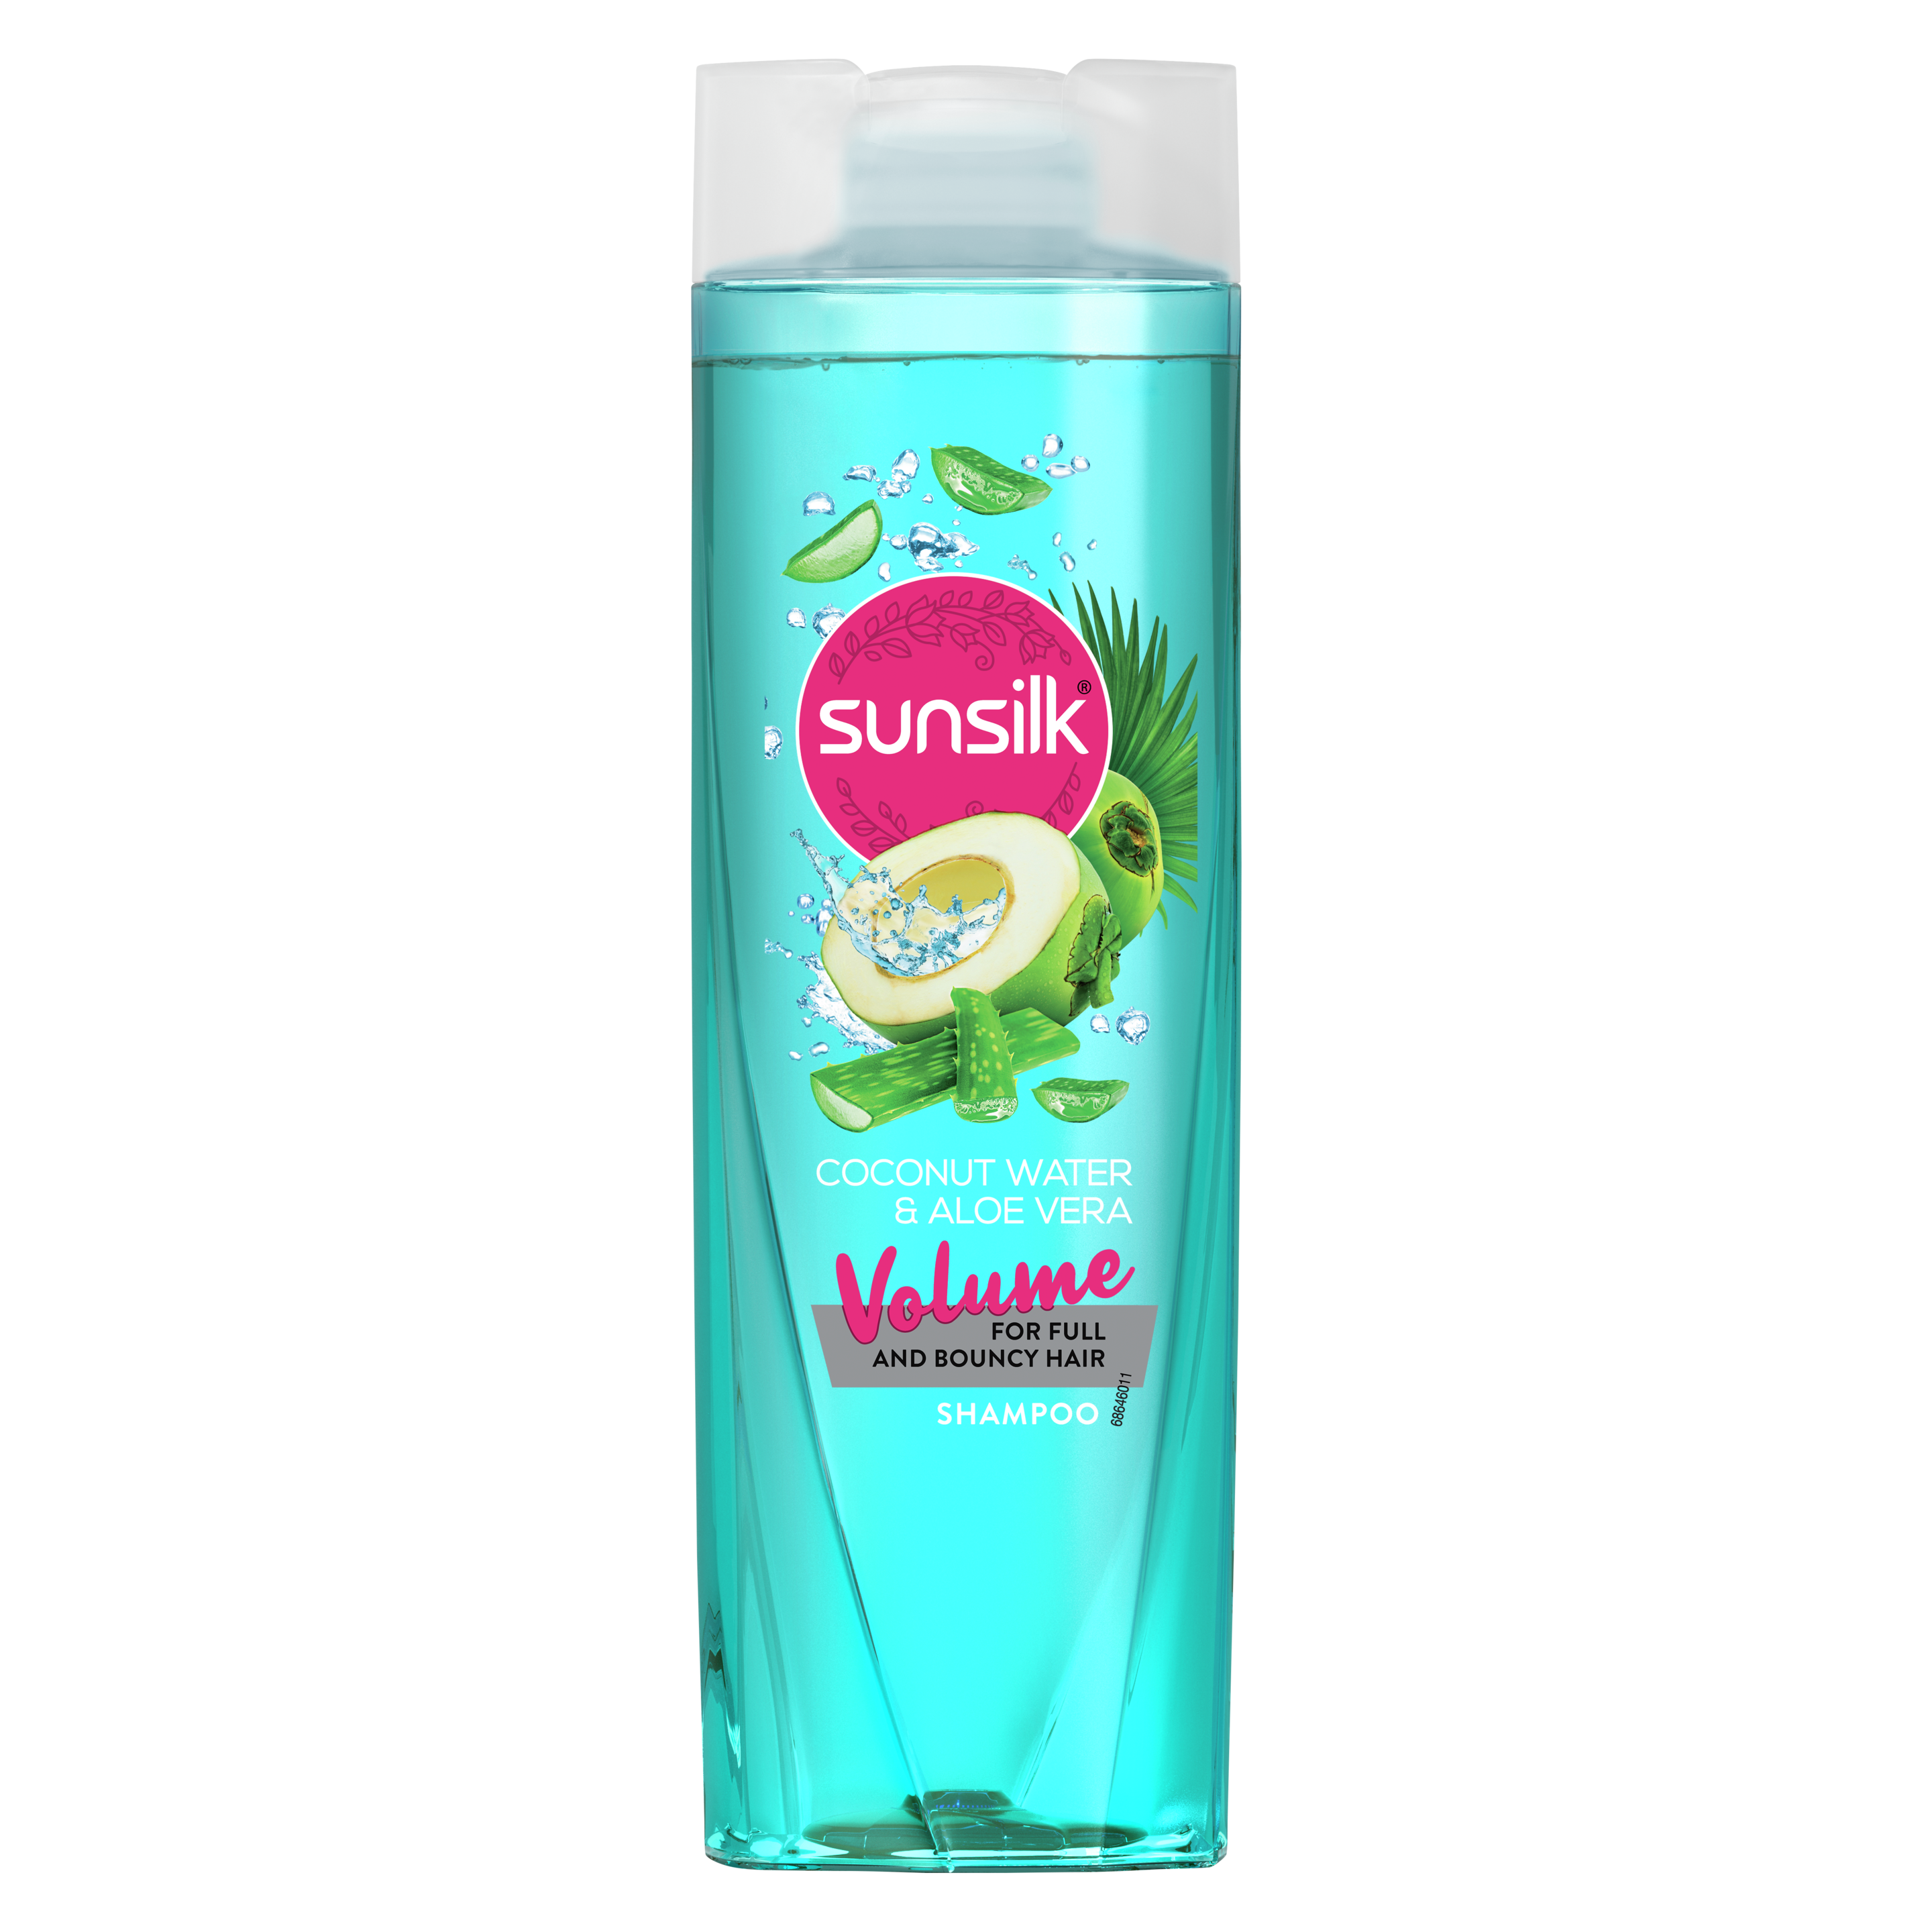 Sunsilk Coconut Water & Aloe Vera Volume Shampoo